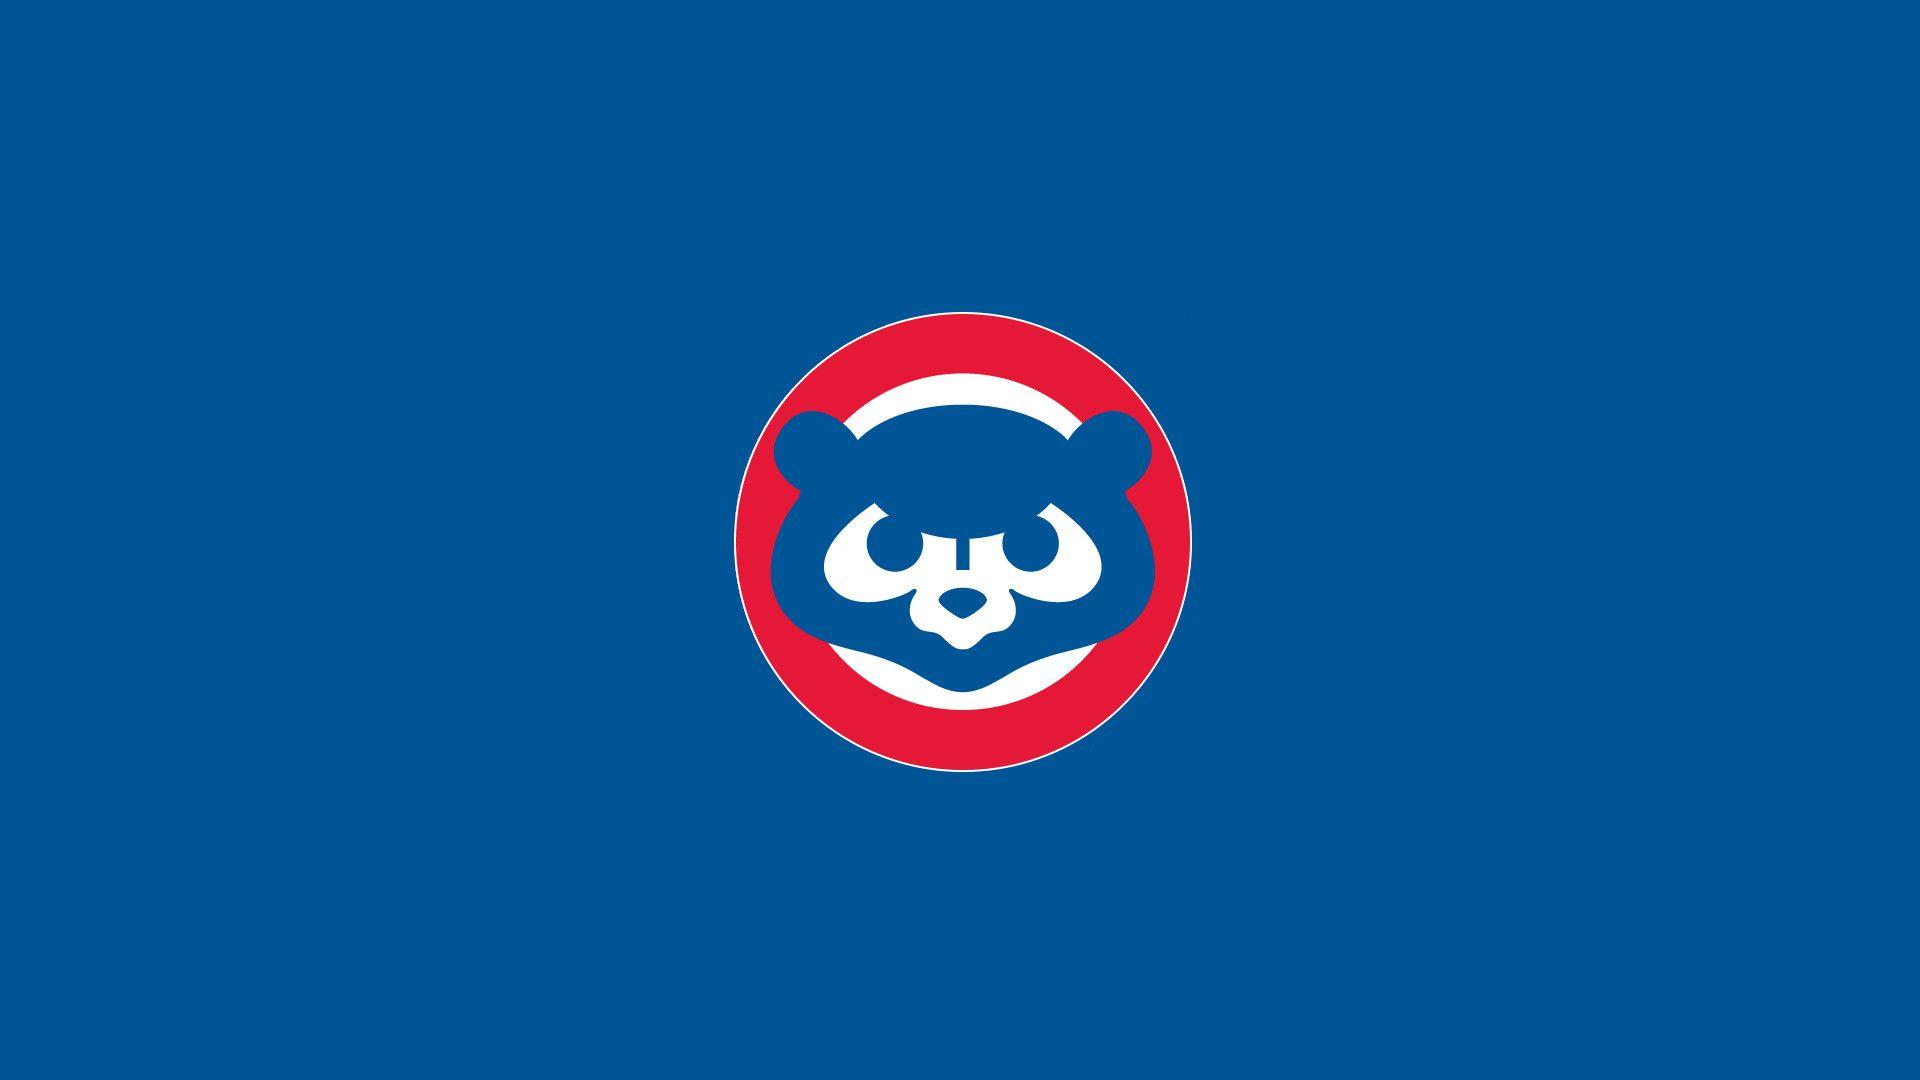 Chicago Cubs 2018 Wallpaper